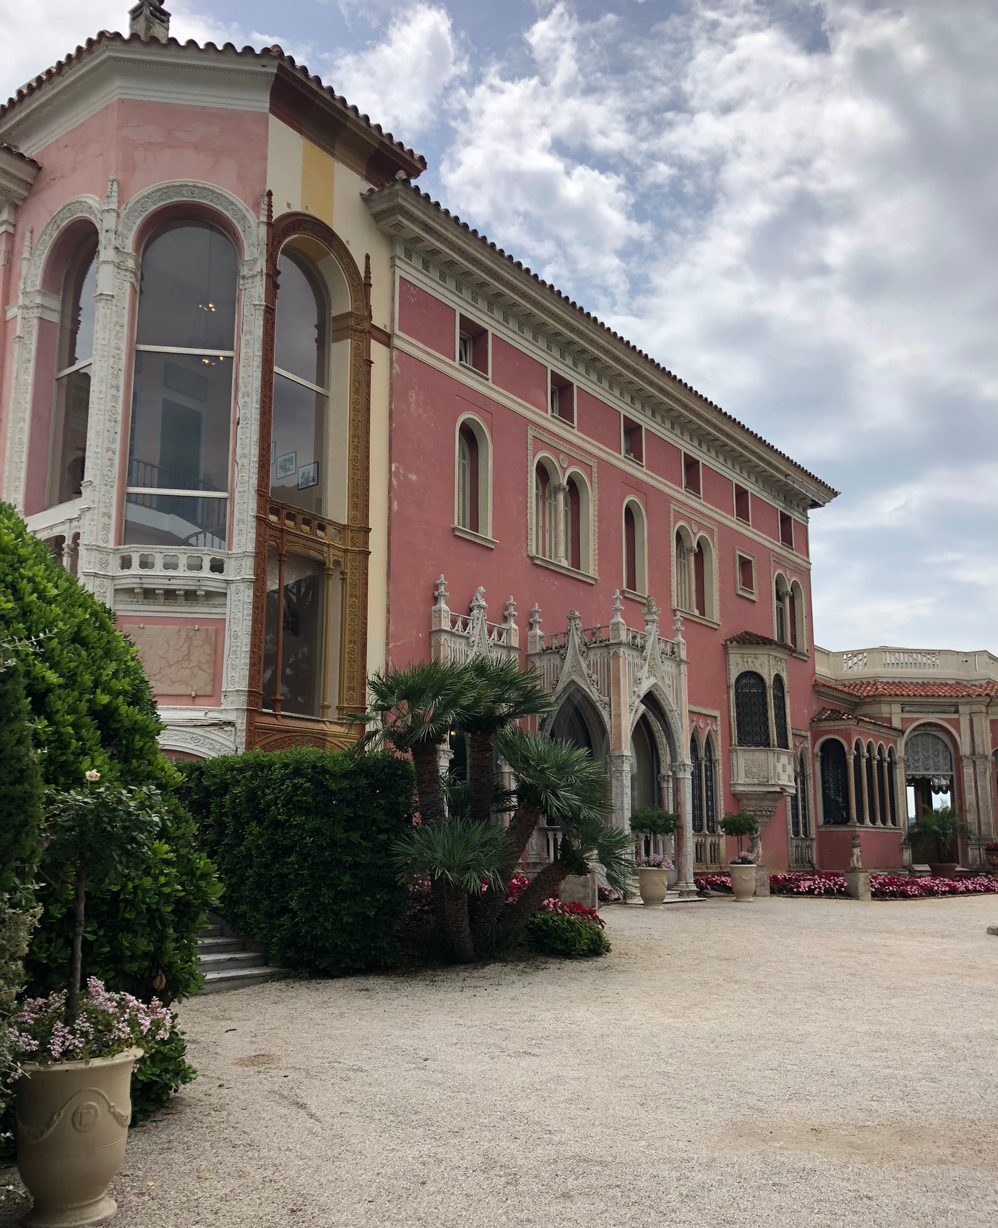 What happend June 2018 Villa Ephrussi de Rothschild